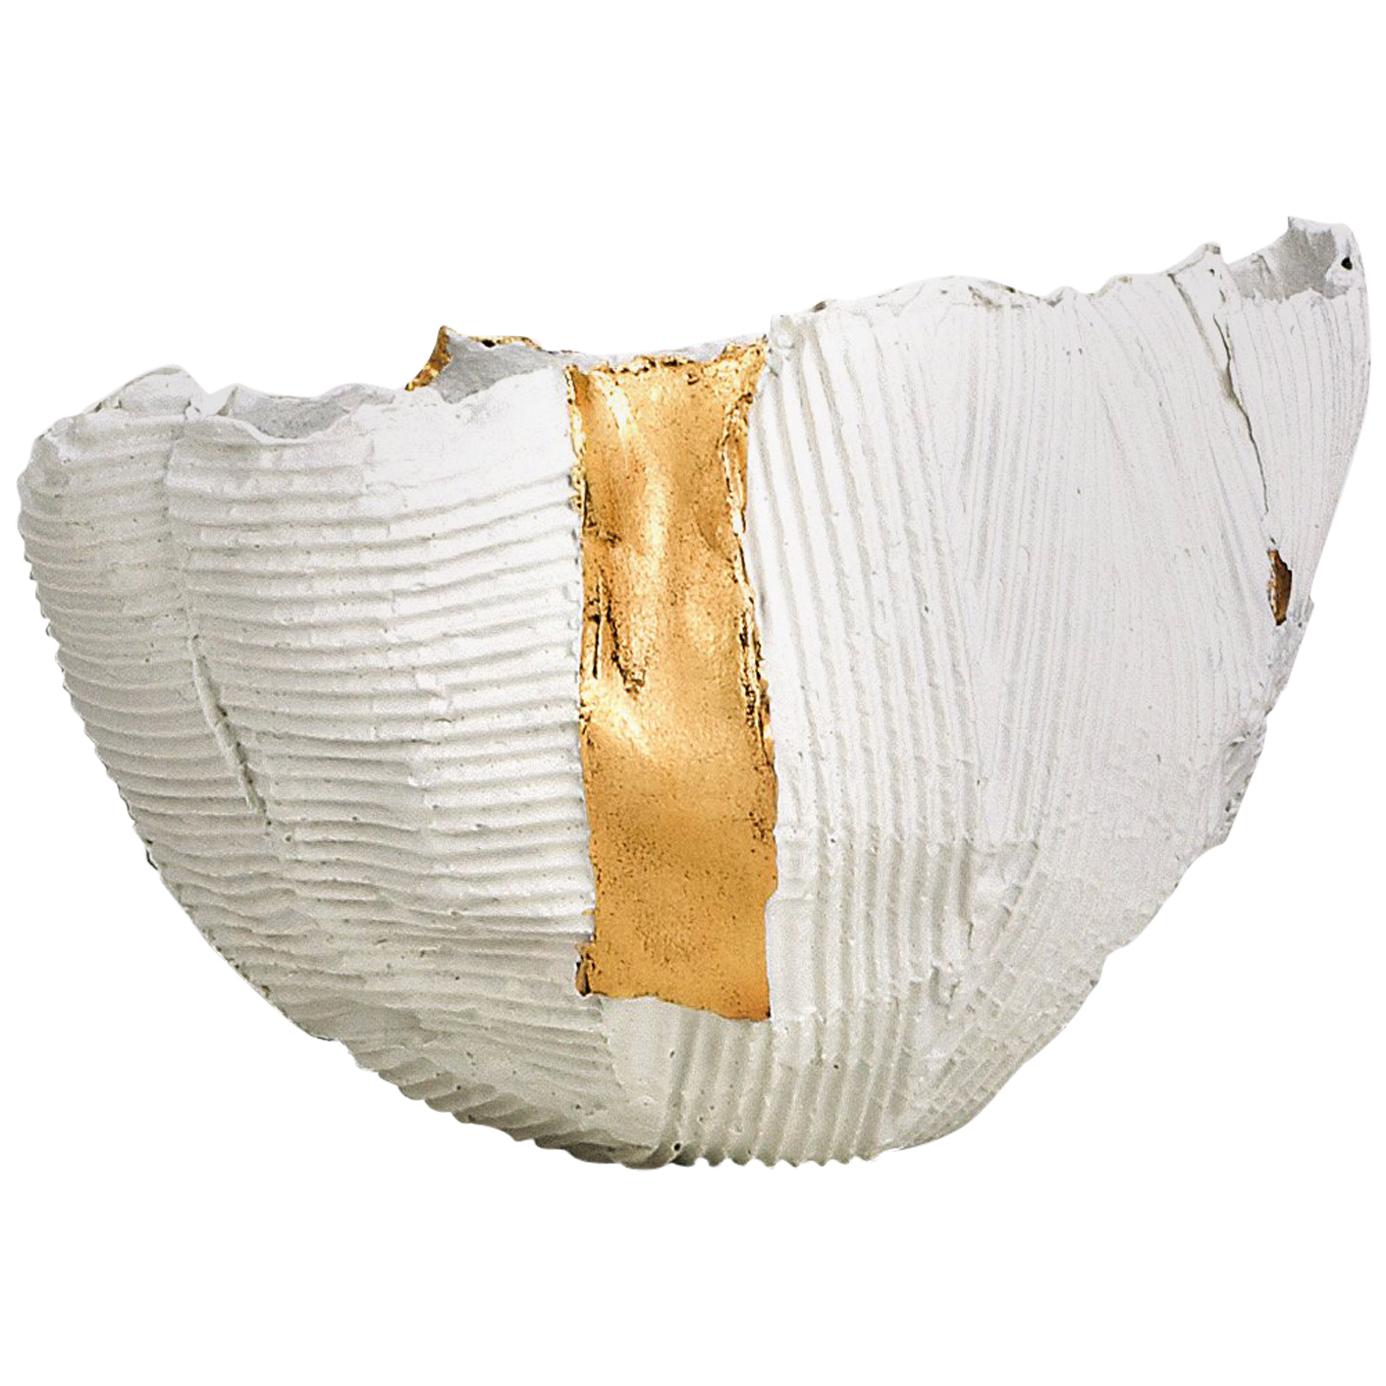 Bol en céramique contemporain Cartocci texturé blanc et or n° 2 en vente